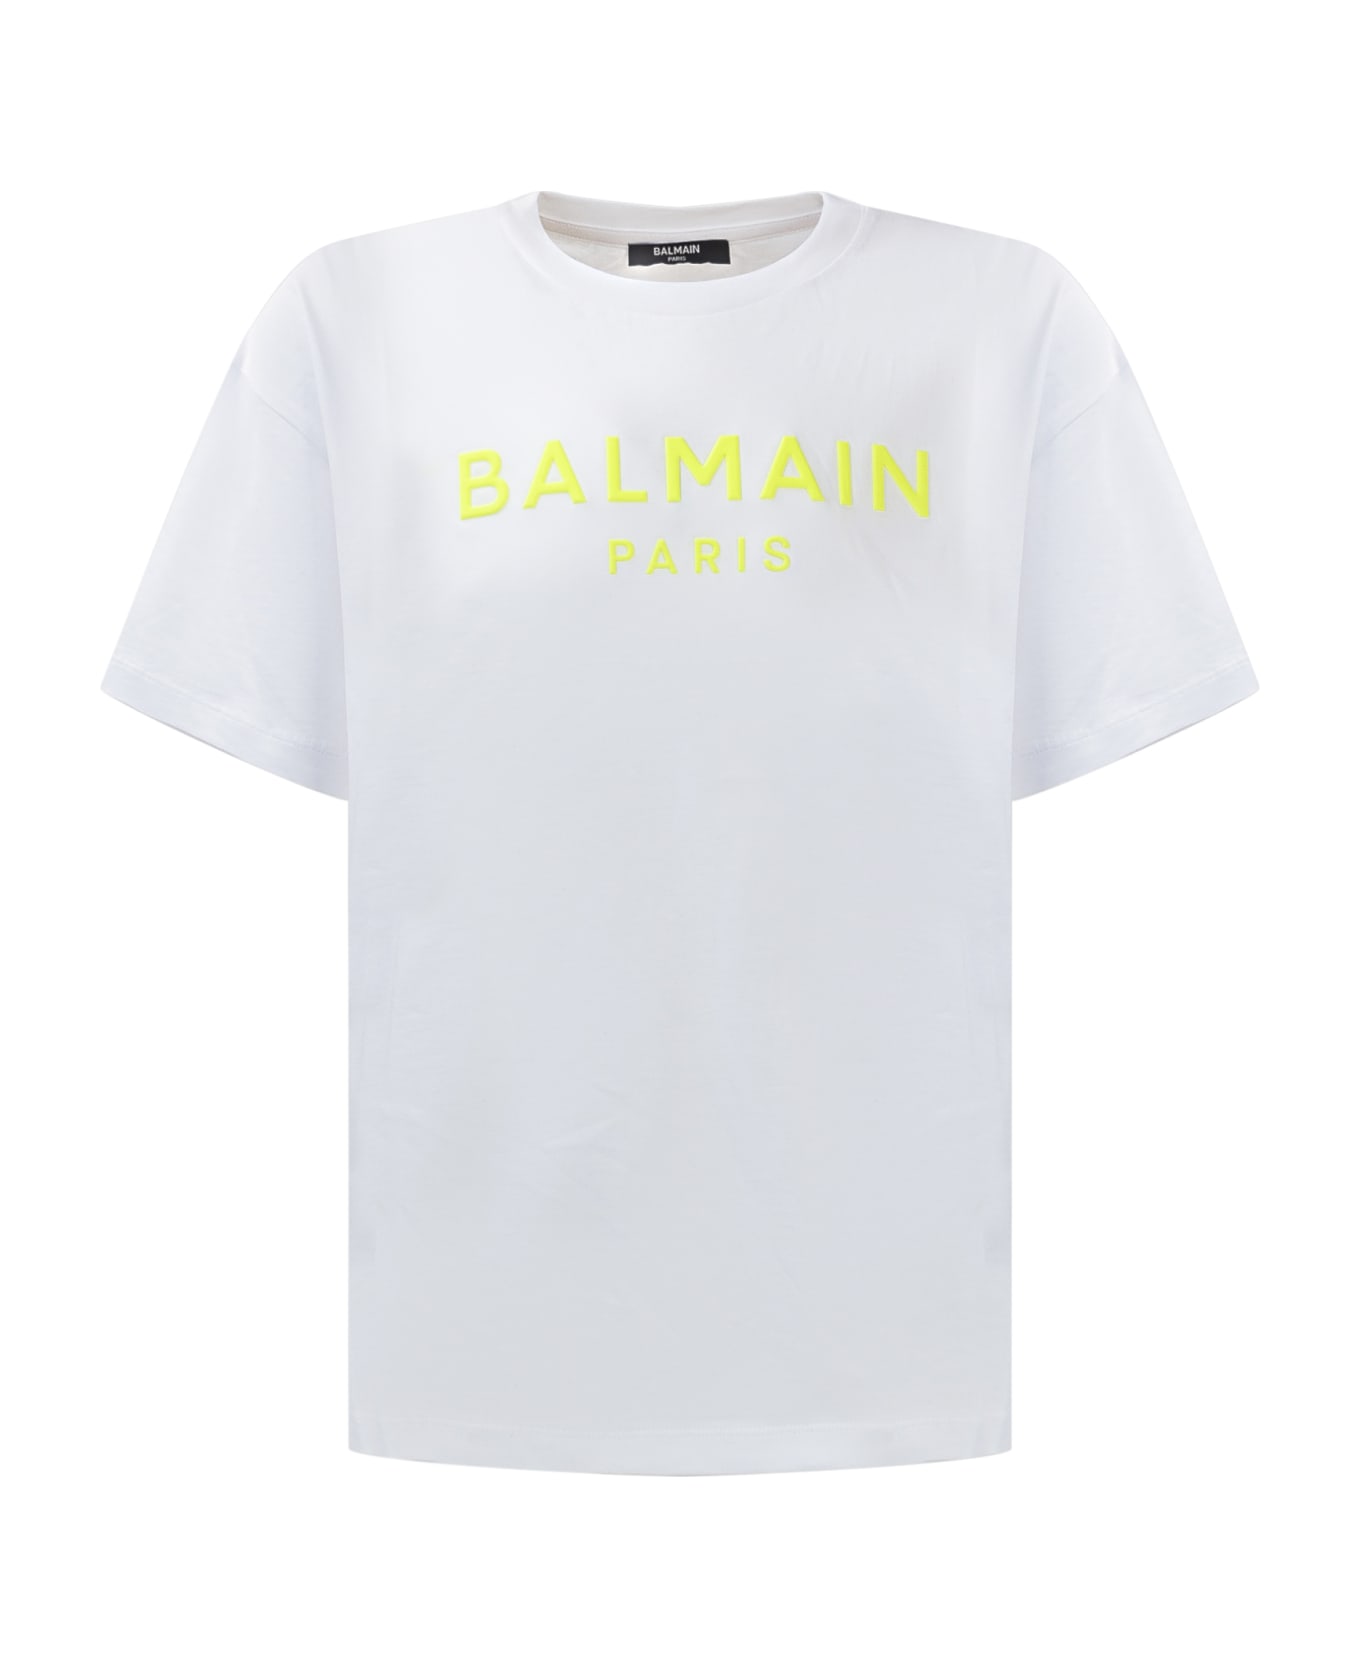 Balmain Logo T-shirt - WHITE/YELLOW